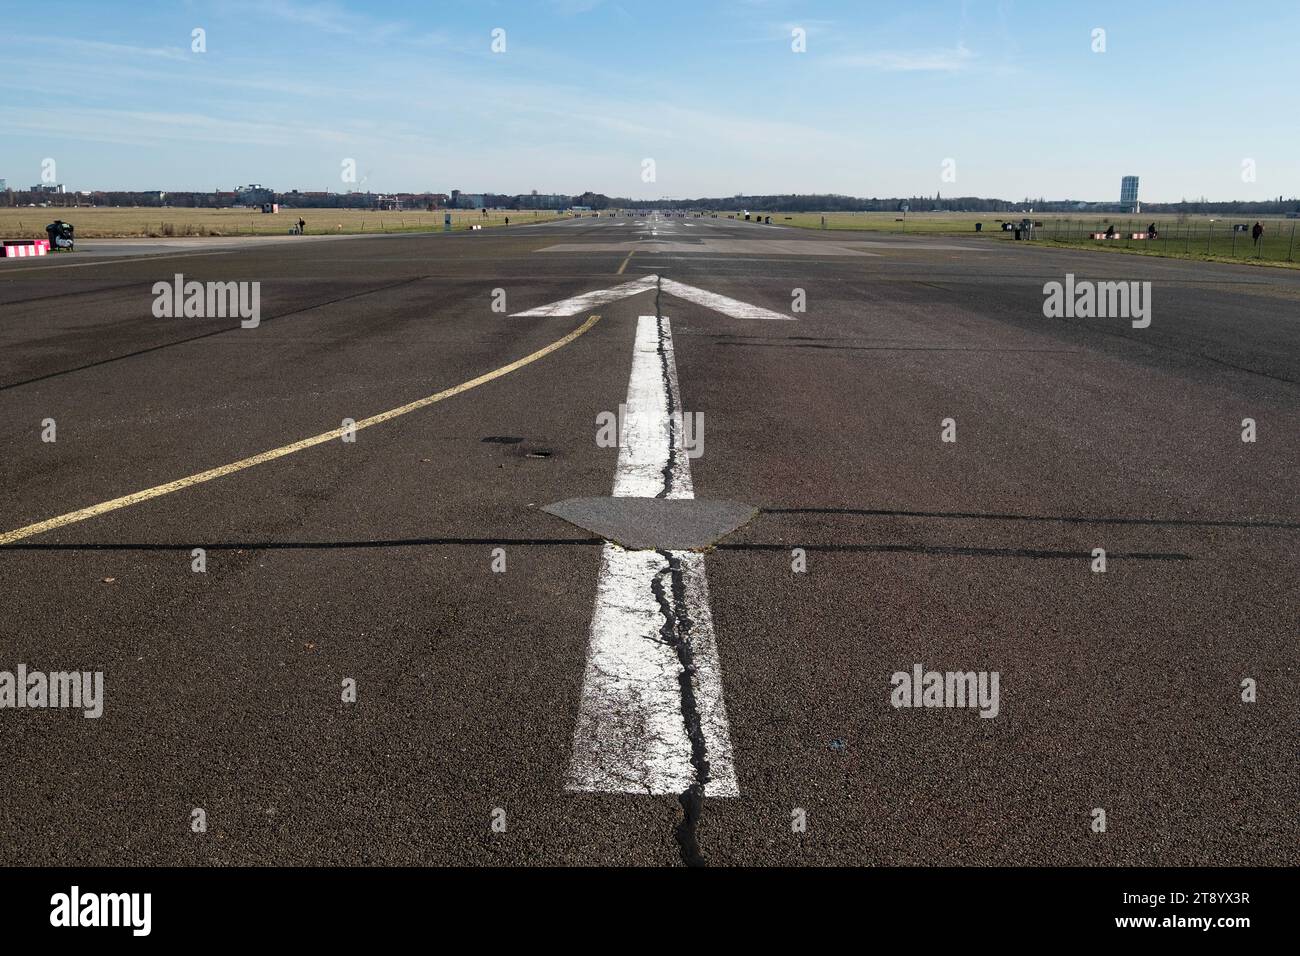 A view of the runway at the disused Berlin Tempelhof airport / Tempelhofer Feld Stock Photo